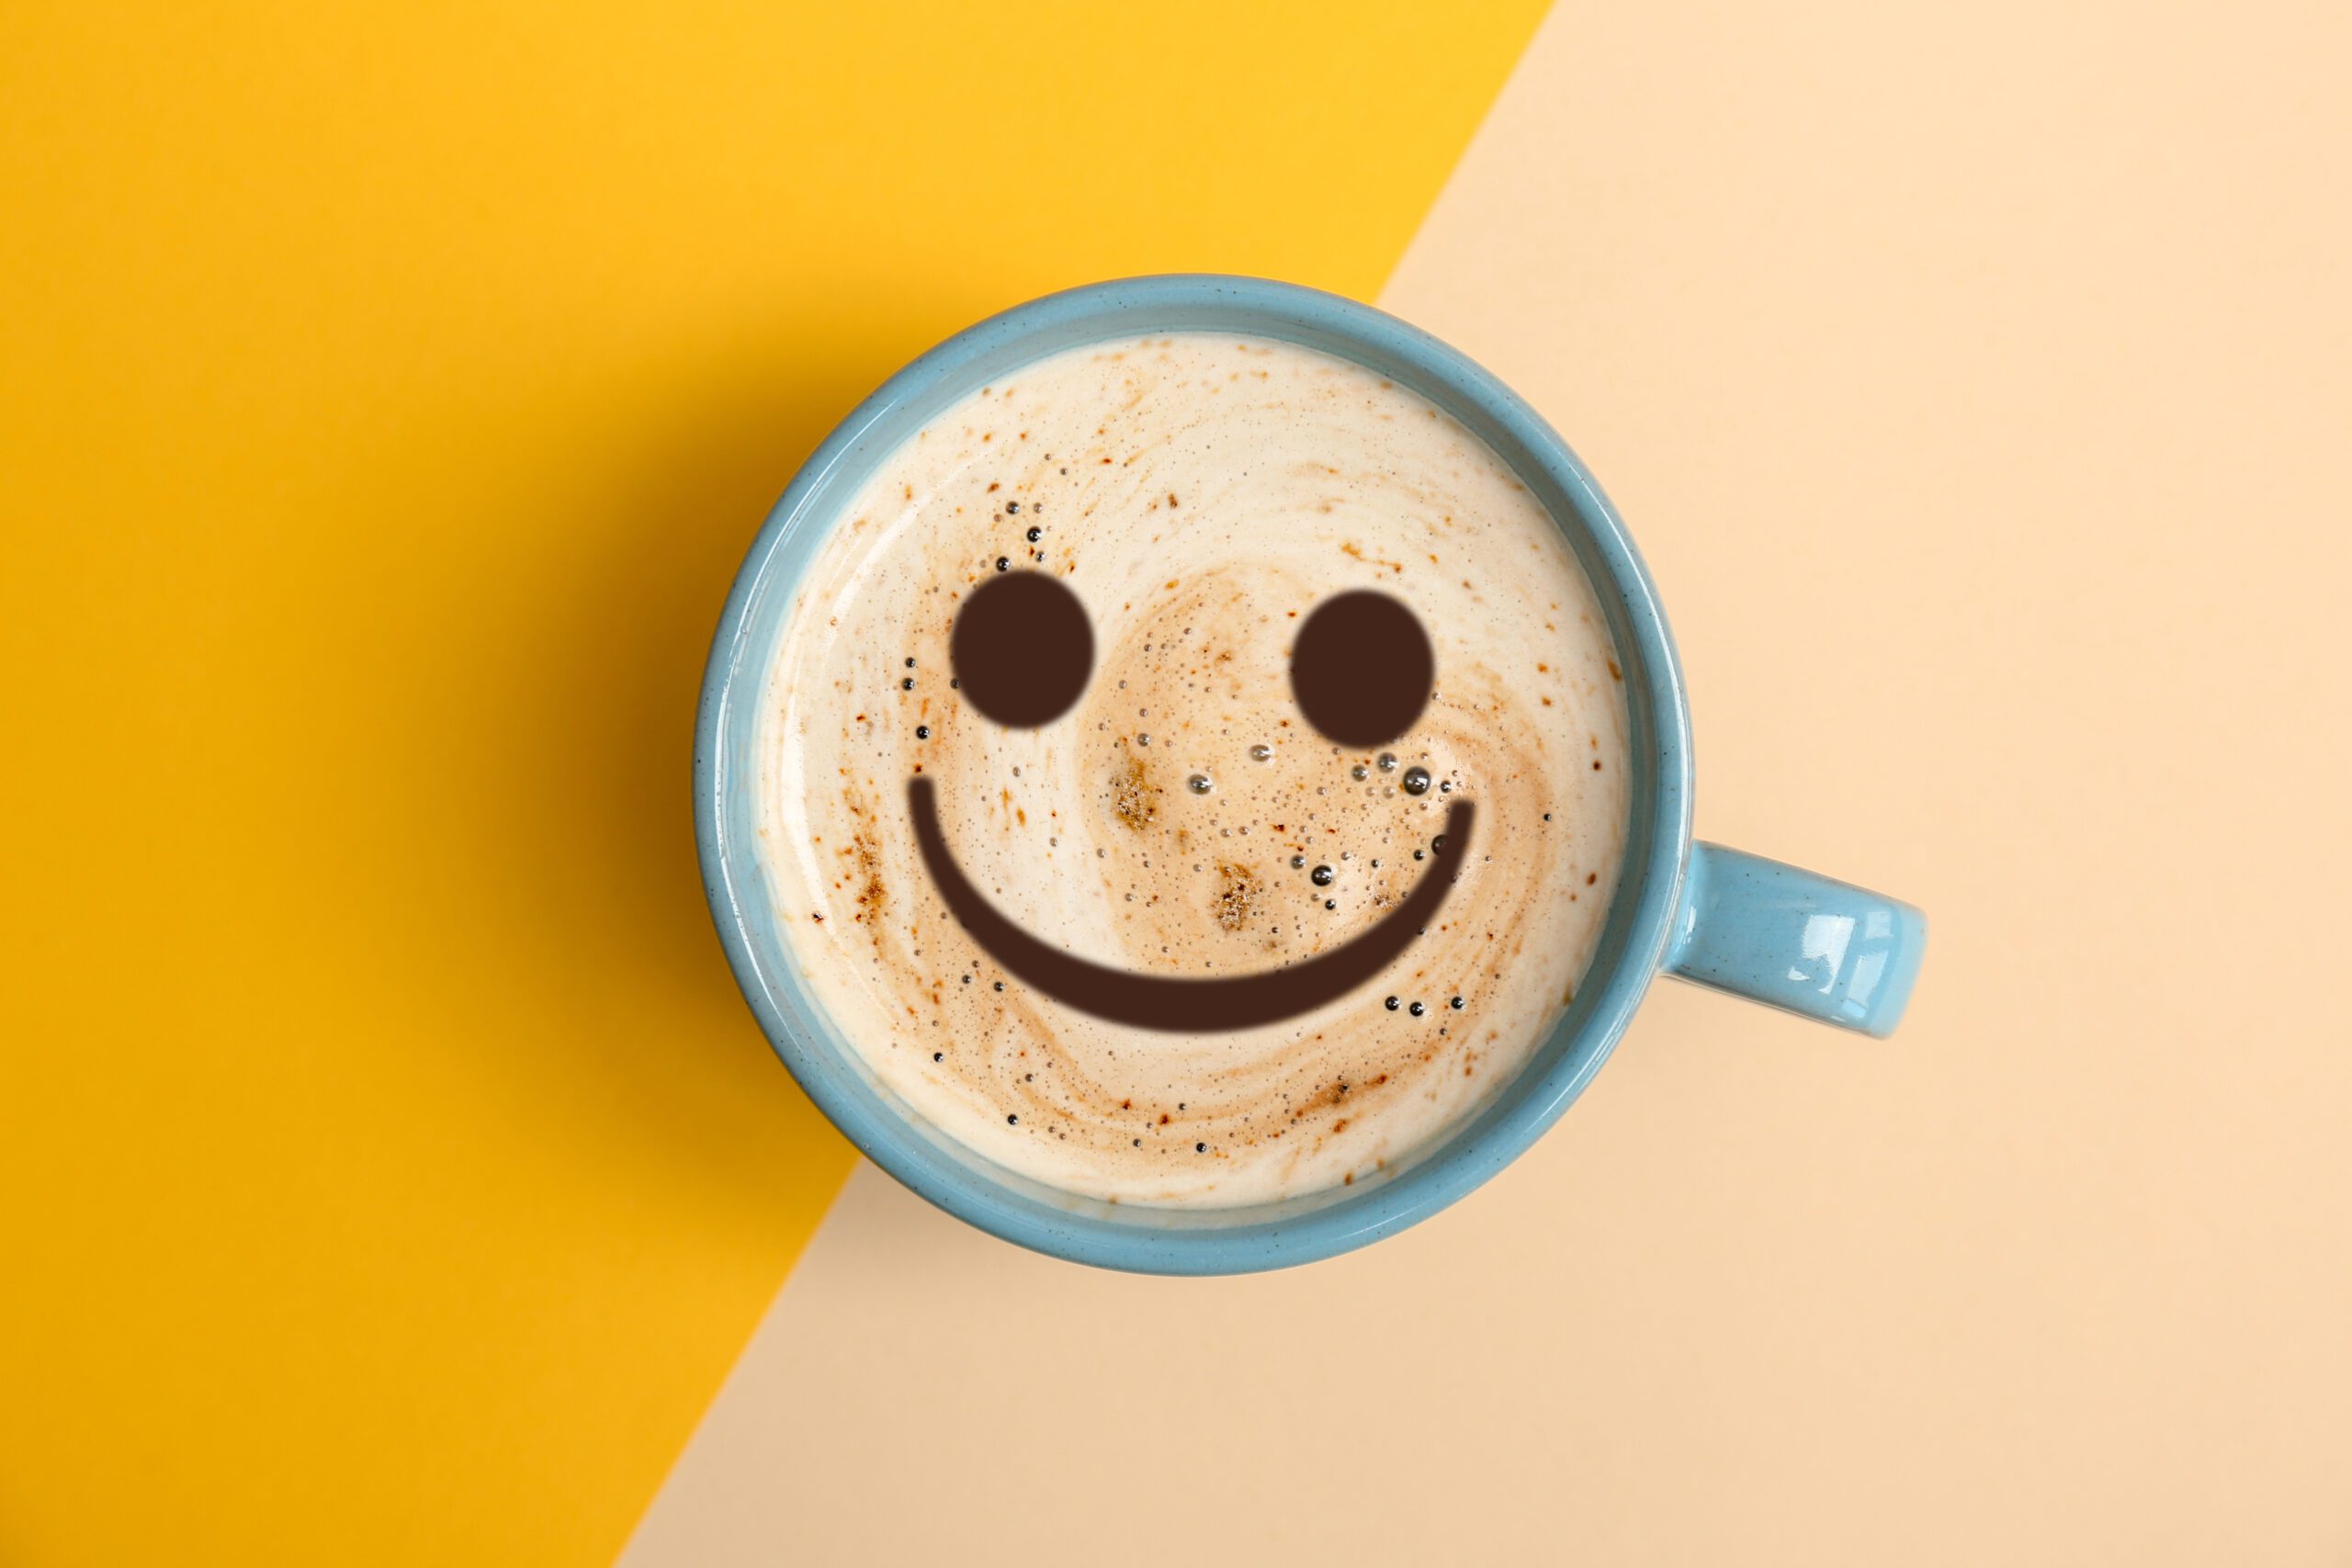 keto coffee and your mood